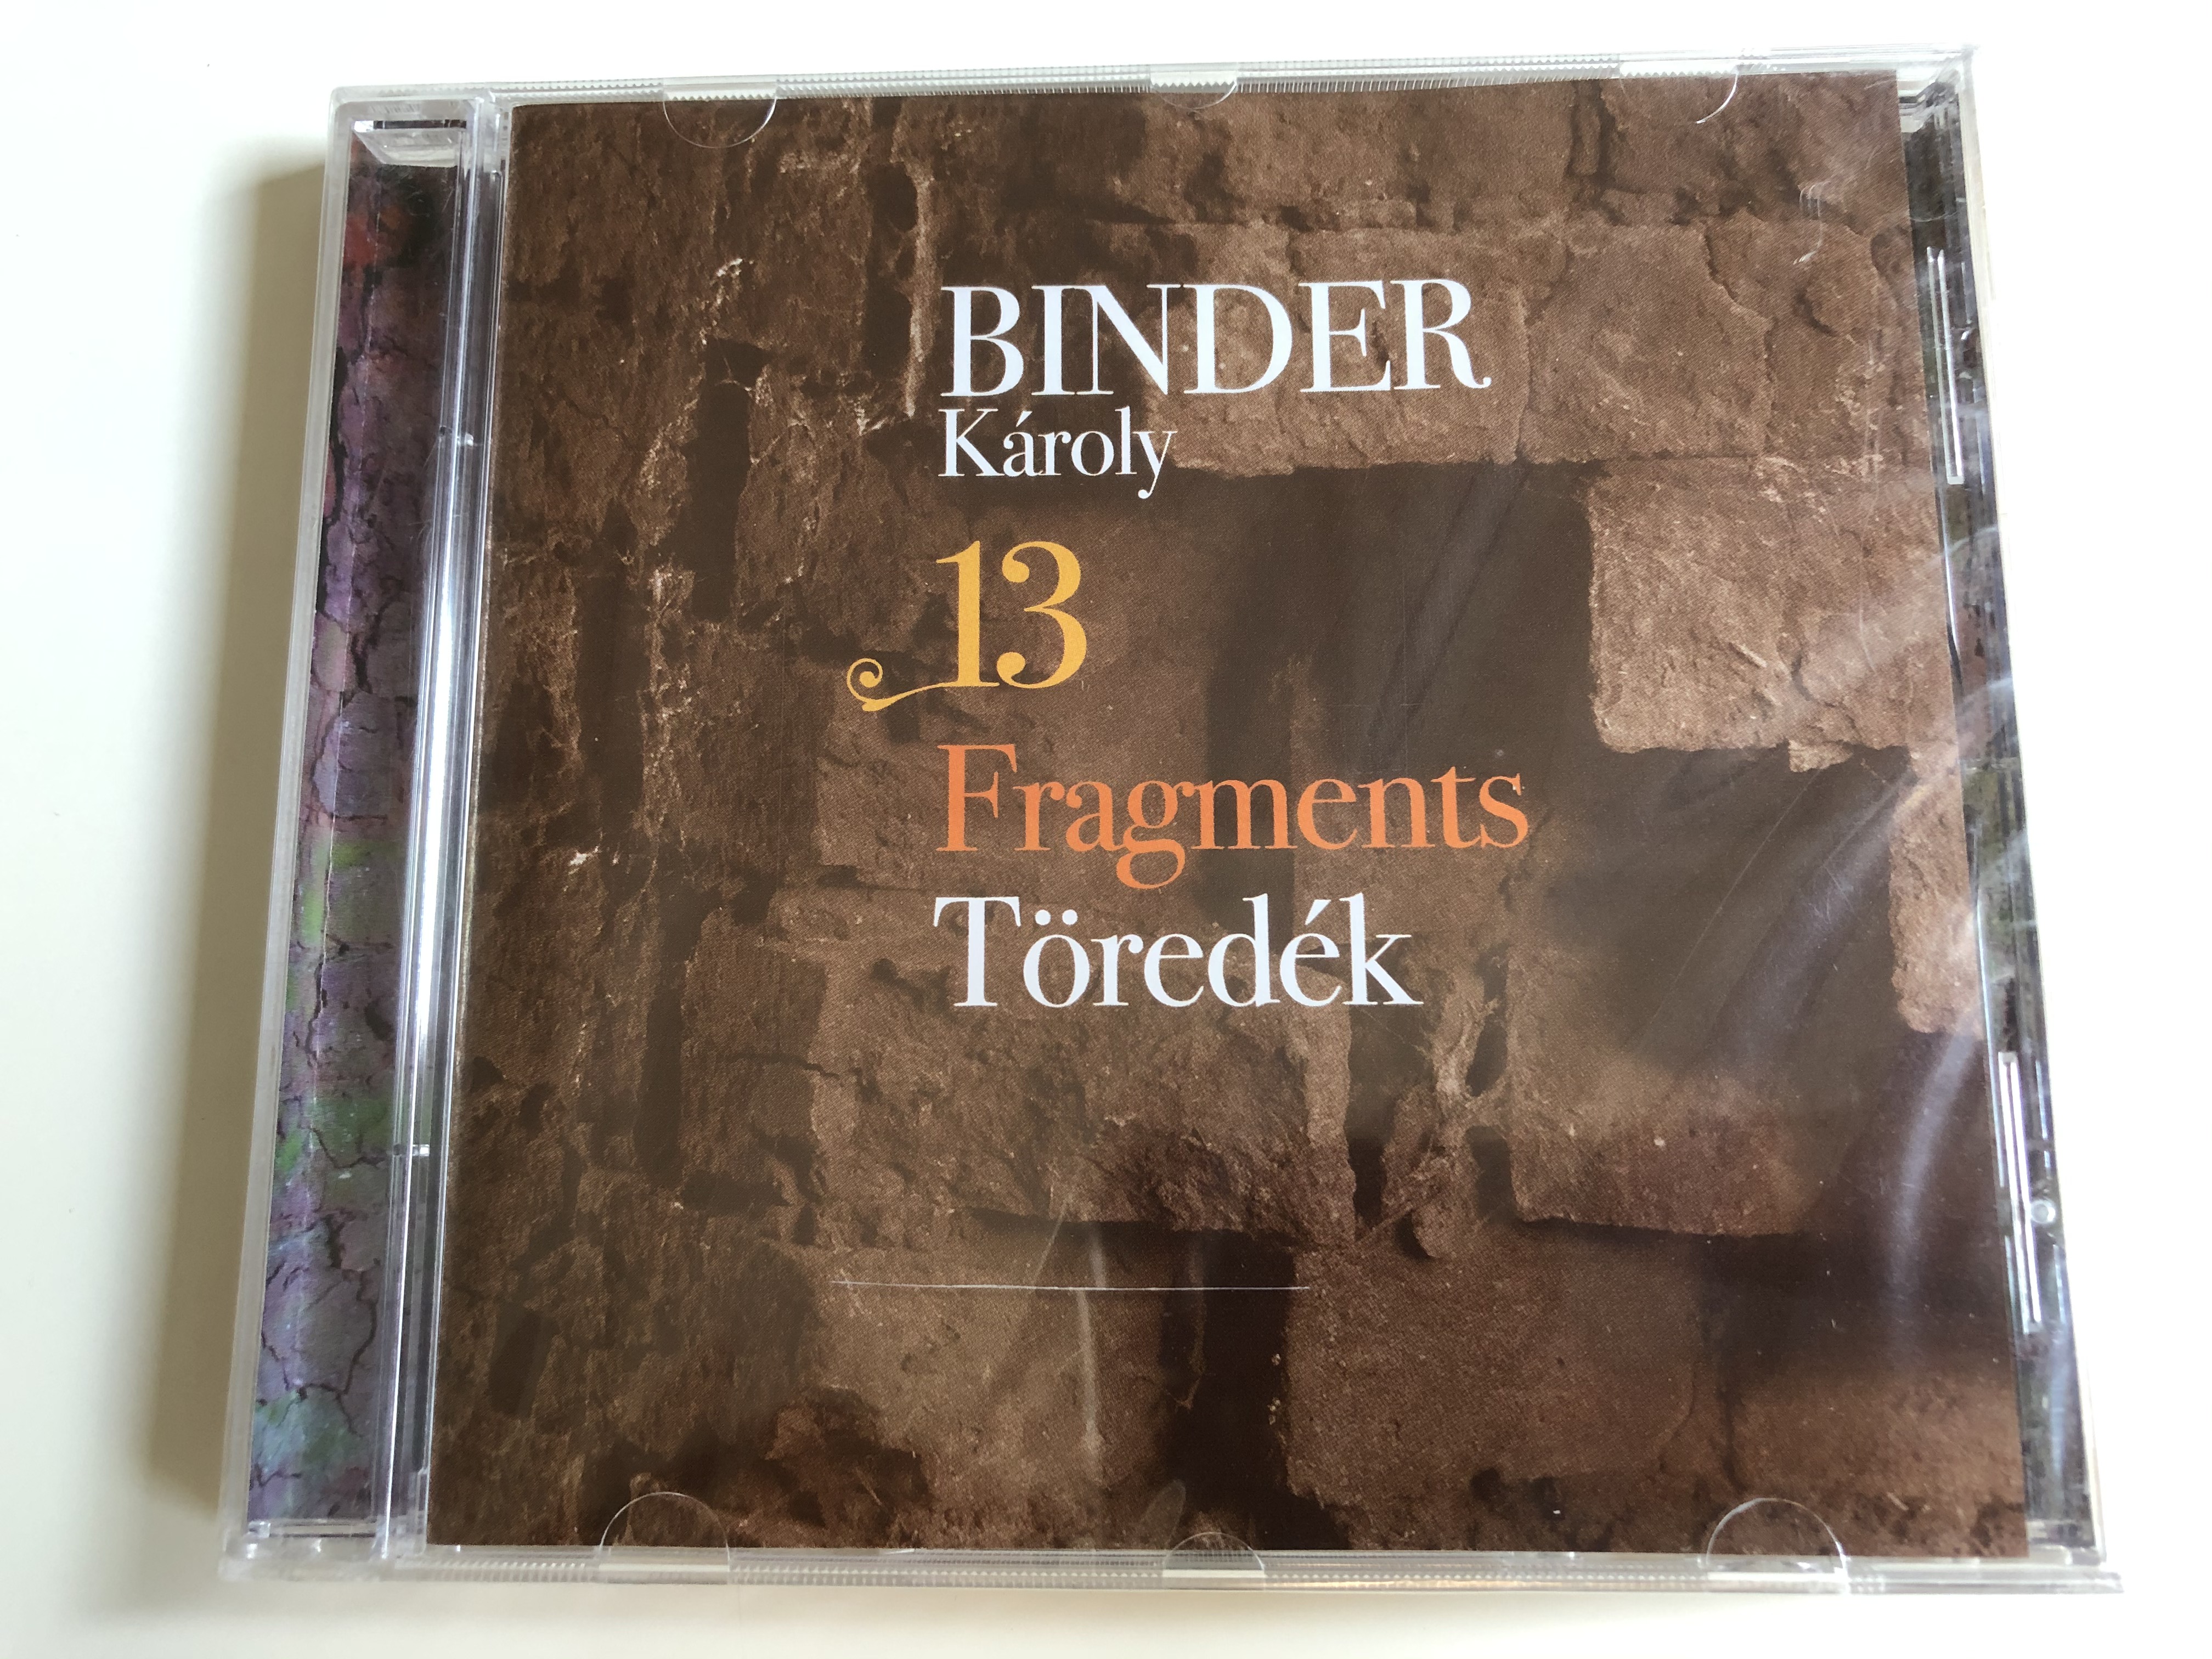 binder-karoly-13-fragments-toredek-bmm-audio-cd-2014-bmm-20150297497366-1-.jpg